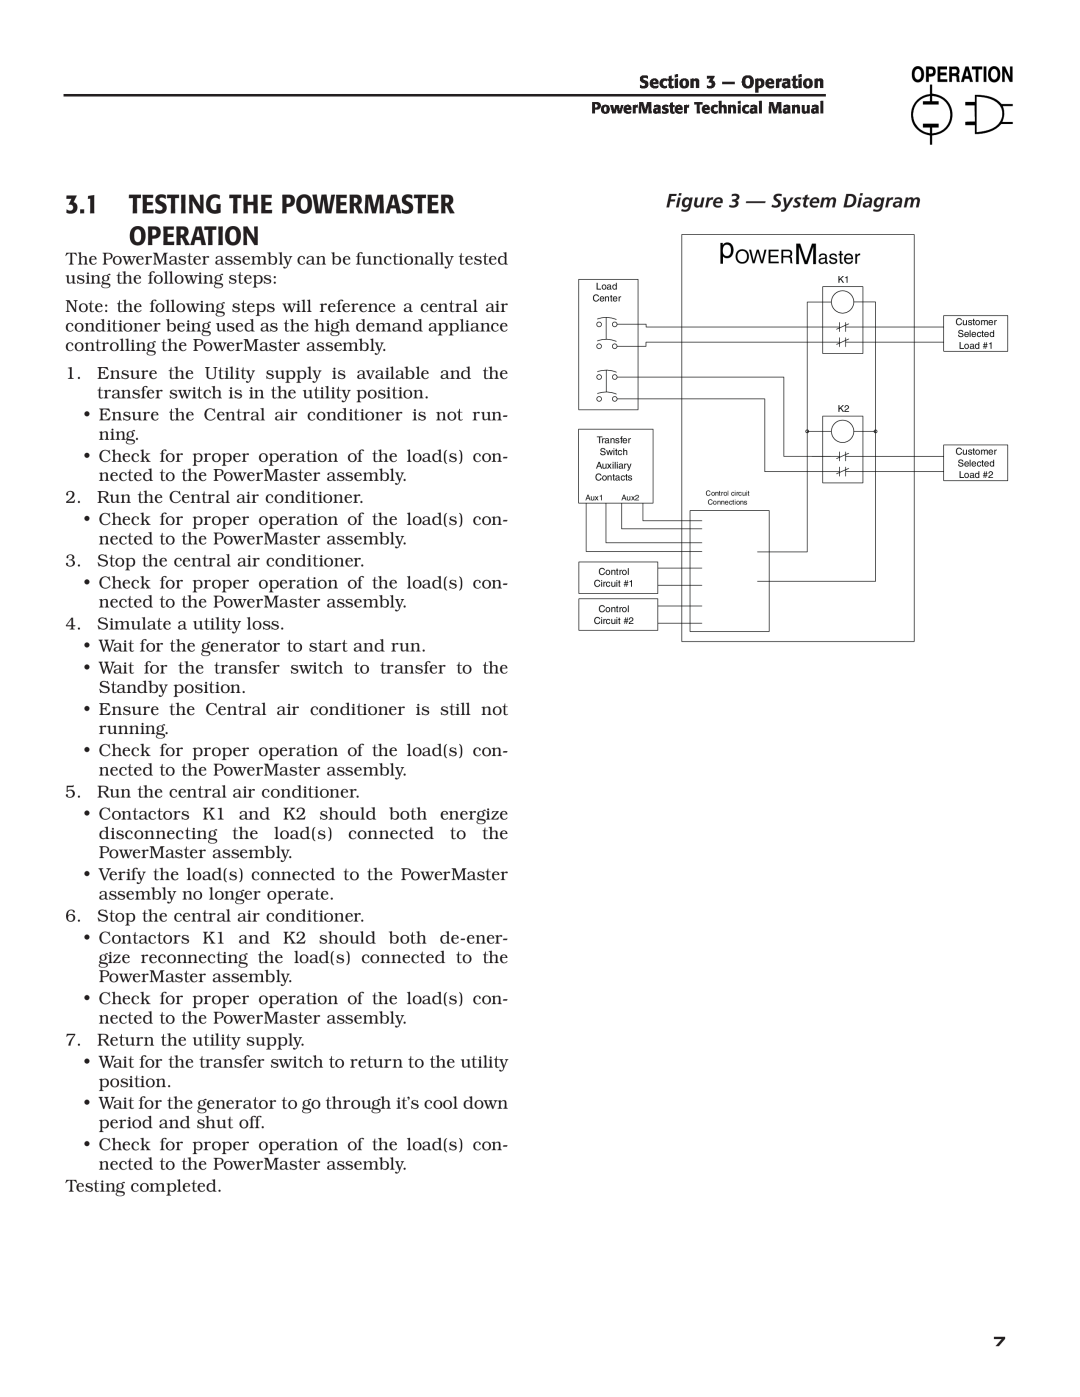 Generac Generator technical manual Testing The Powermaster Operation, System Diagram, pOWER 